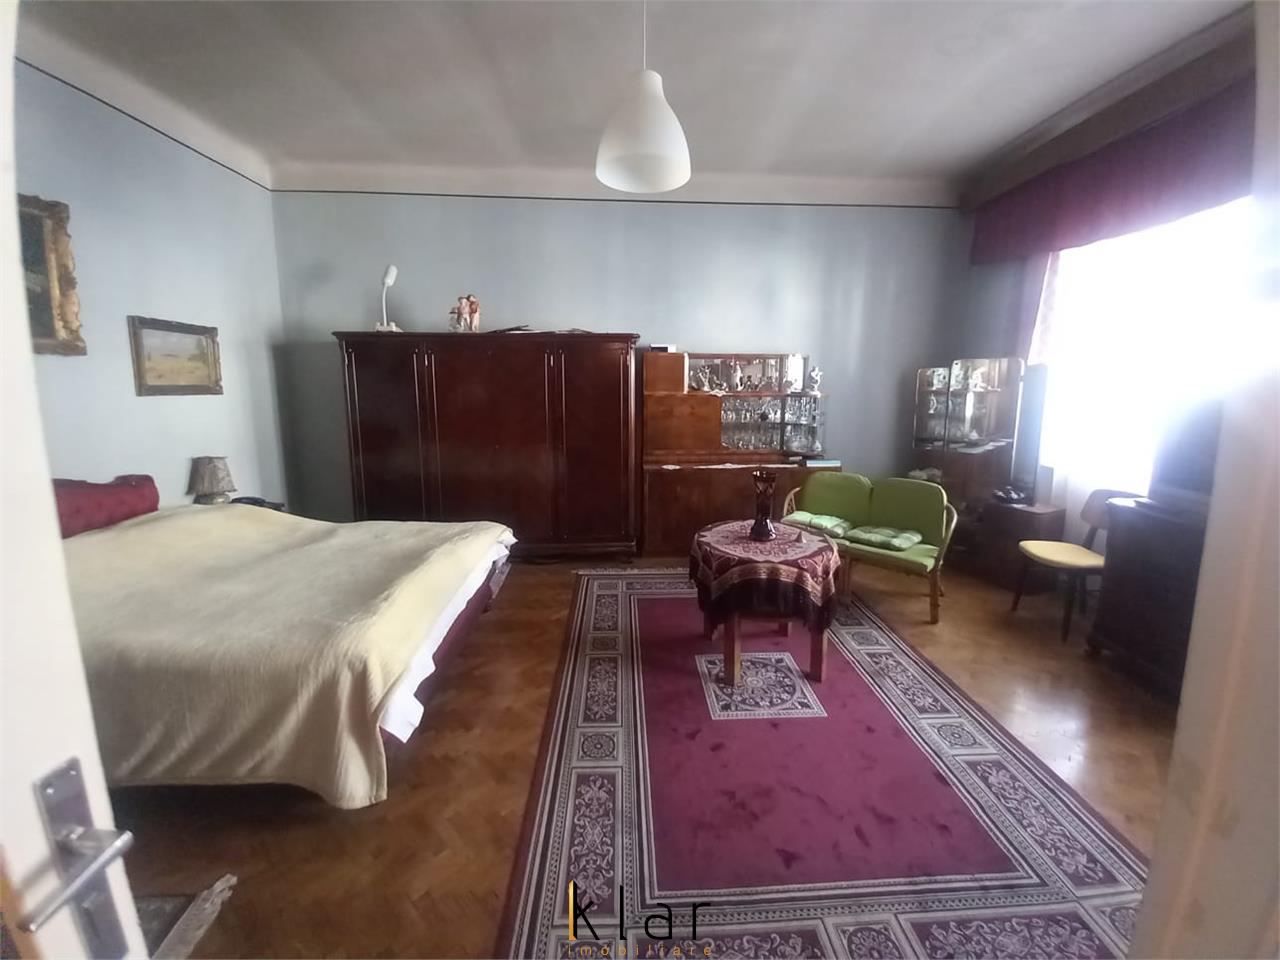 Apartament 2 camere la 1 minut de Piata Unirii din Cluj!